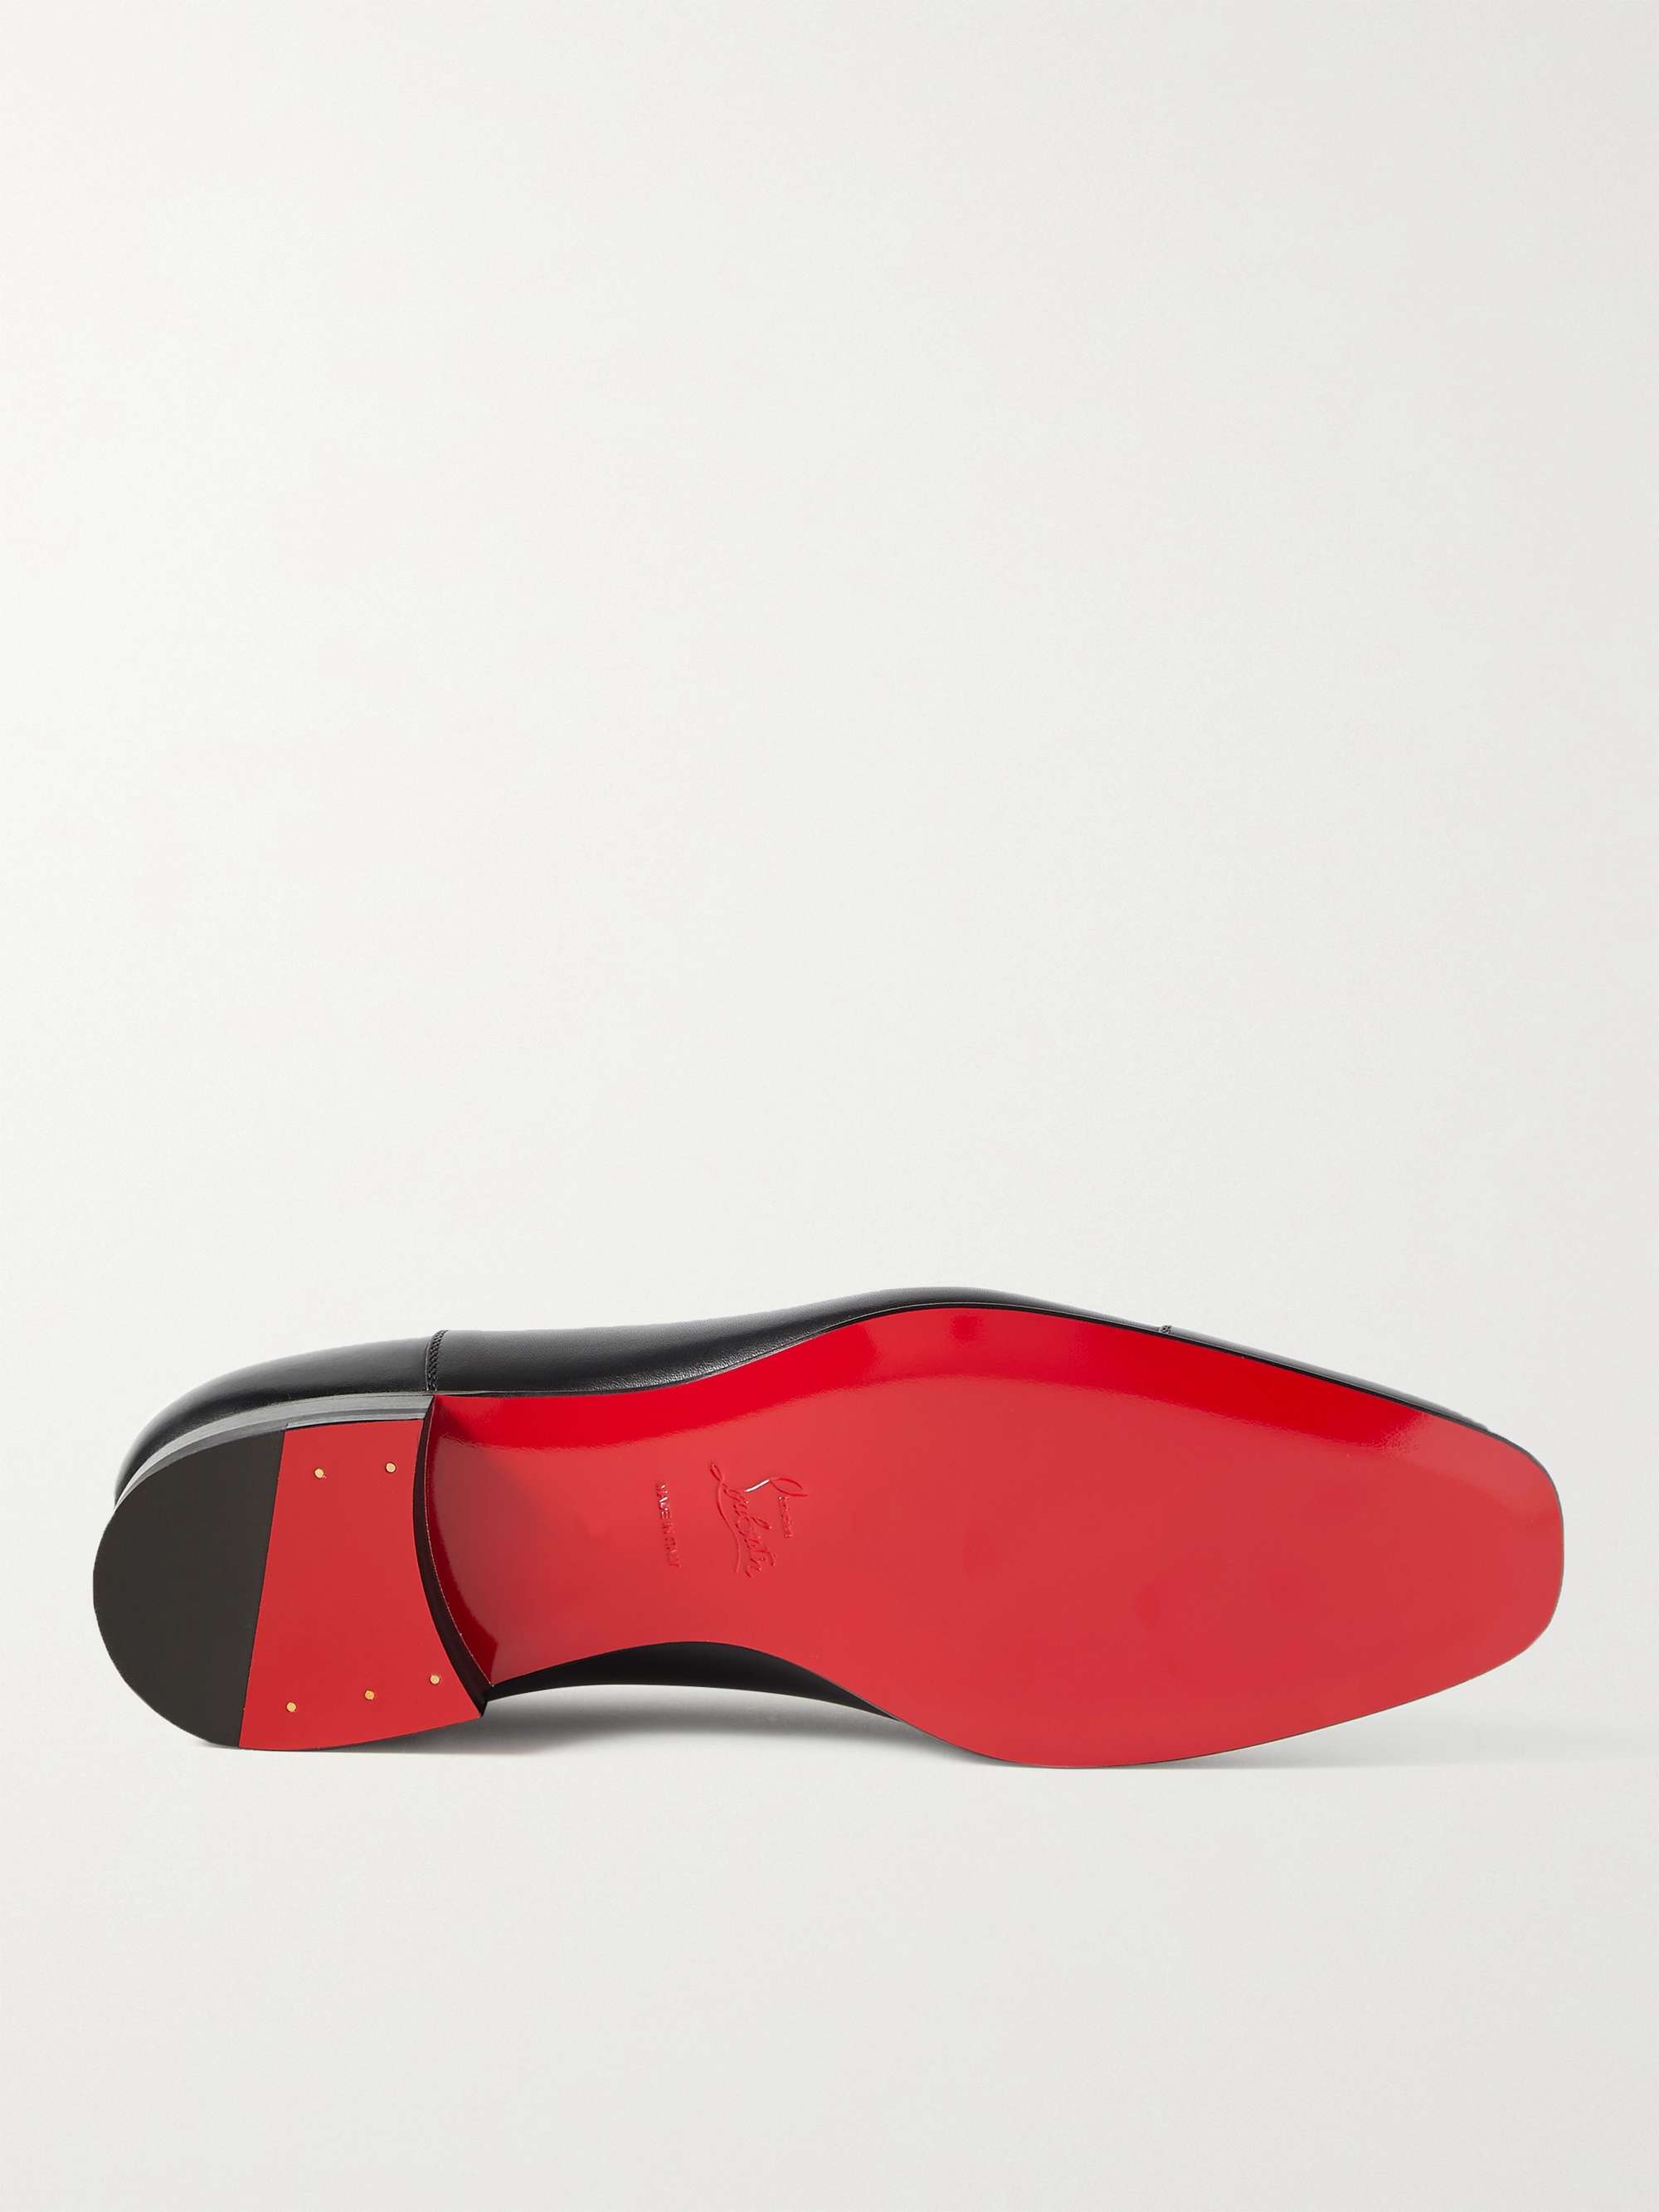 CHRISTIAN LOUBOUTIN Greggo Leather Oxford Shoes for Men | MR PORTER